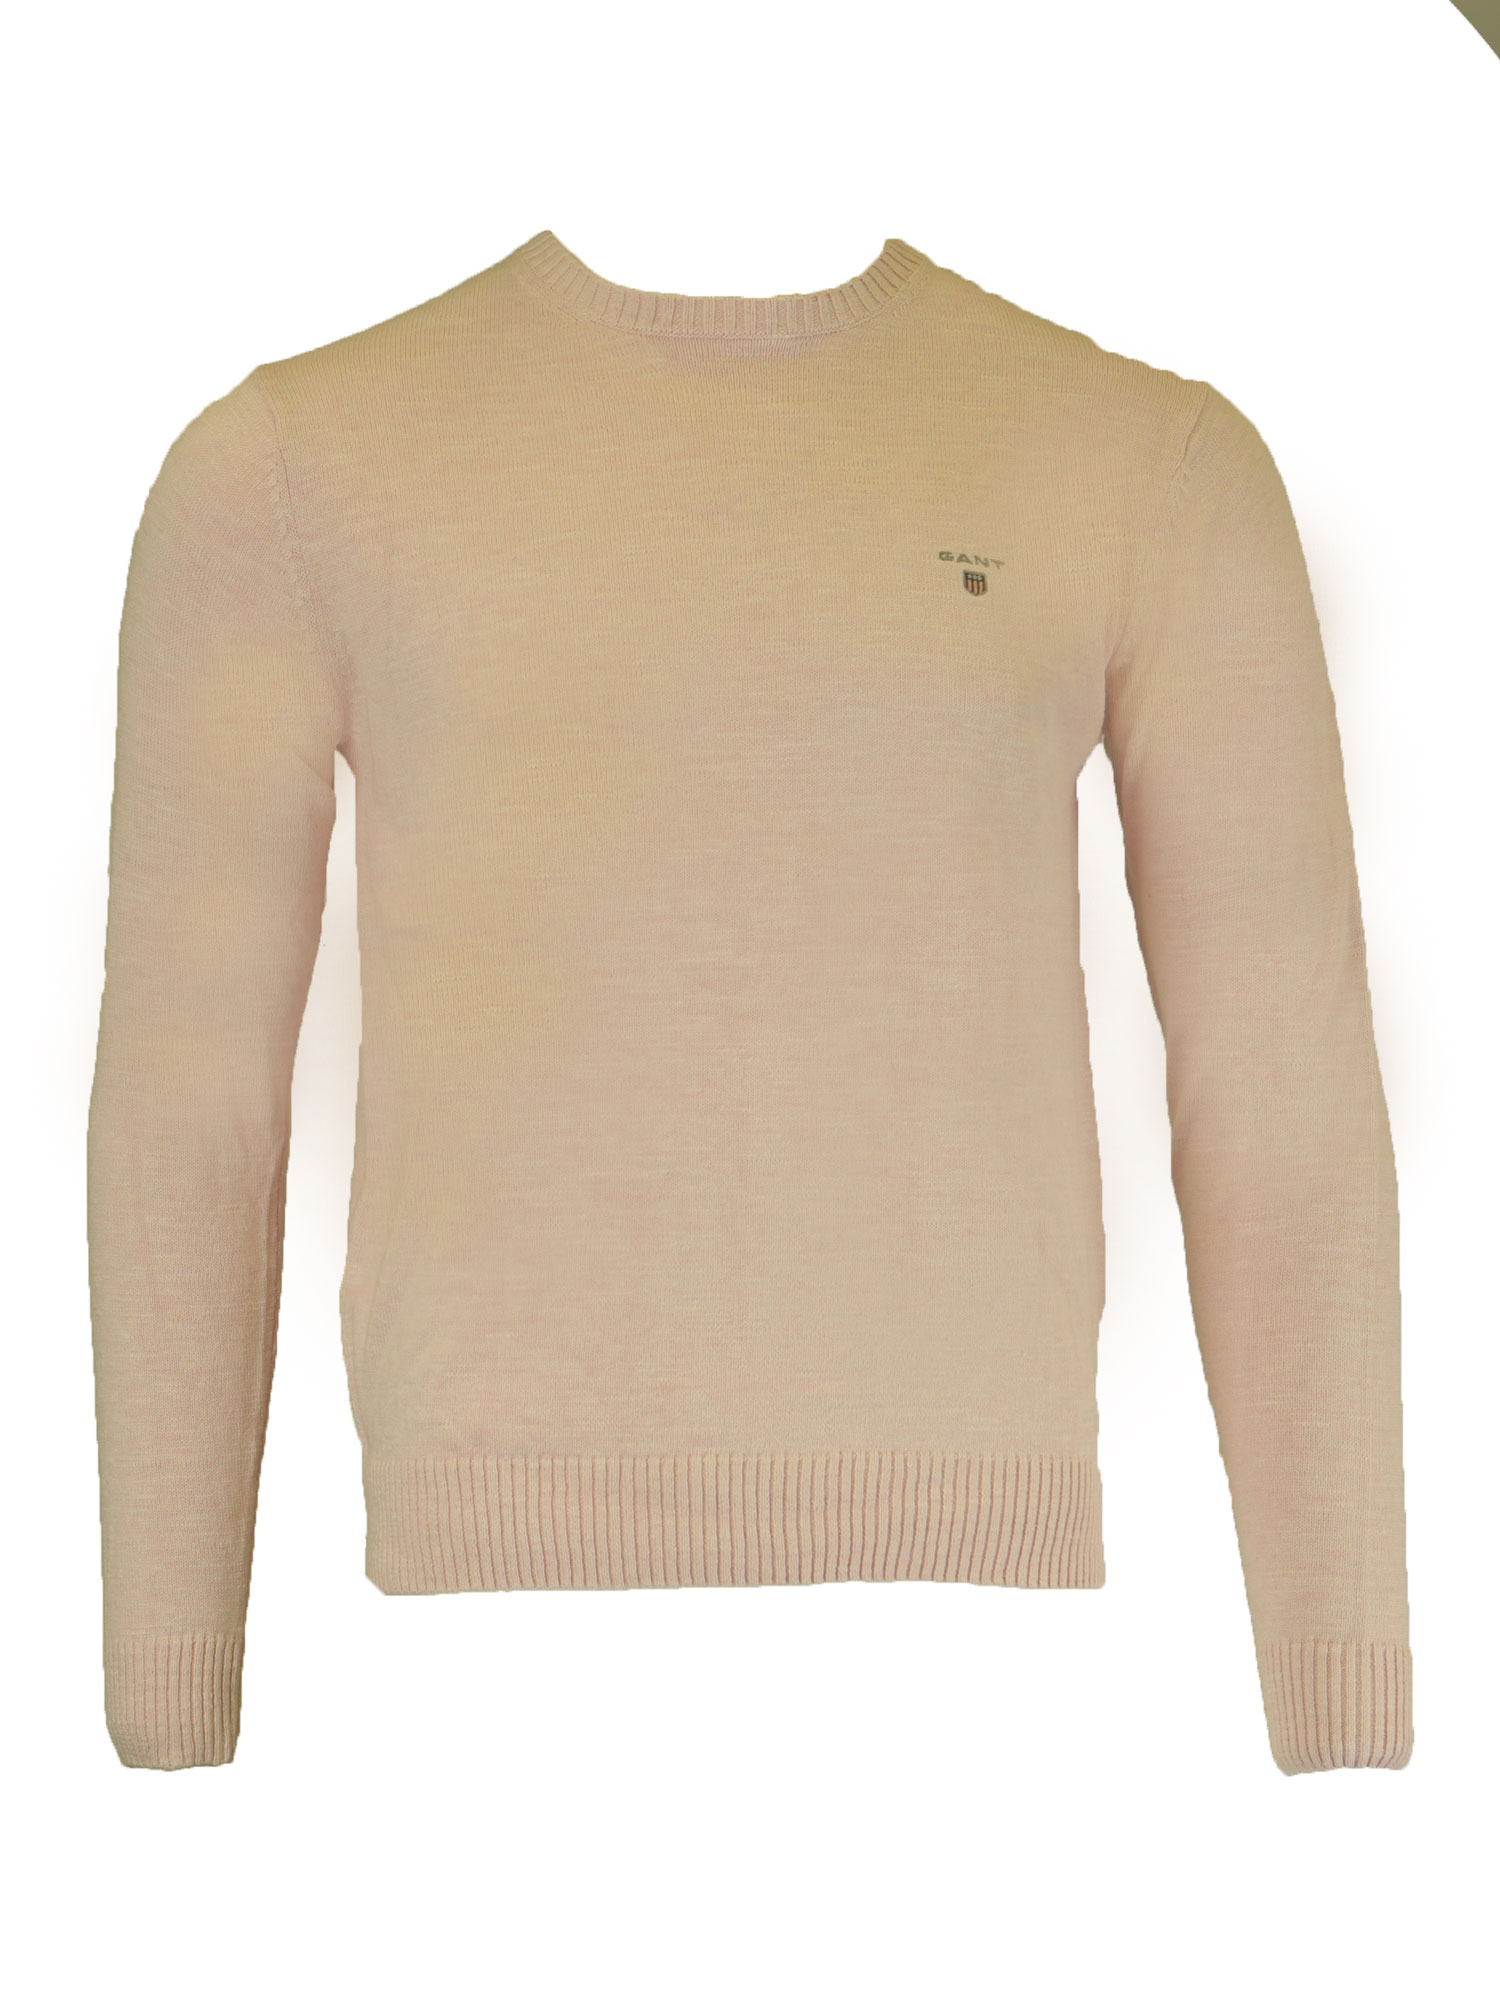 GANT Men's Light Pink Natural Cotton Crew Neck Sweater 83051 Size M ...